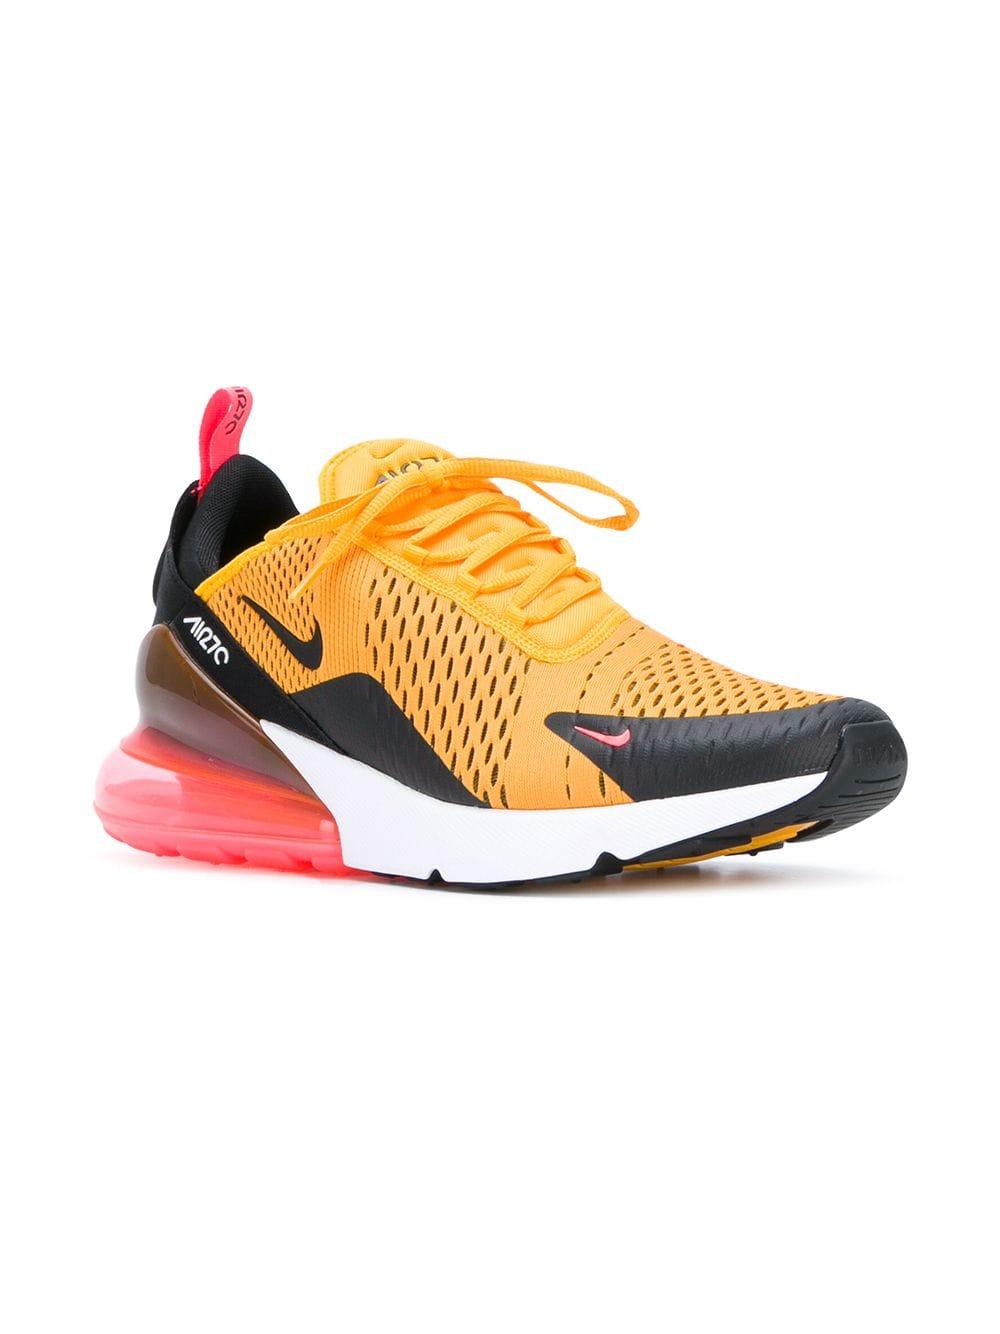 Nike Air Max 270 Sneakers in Yellow for Men - Lyst